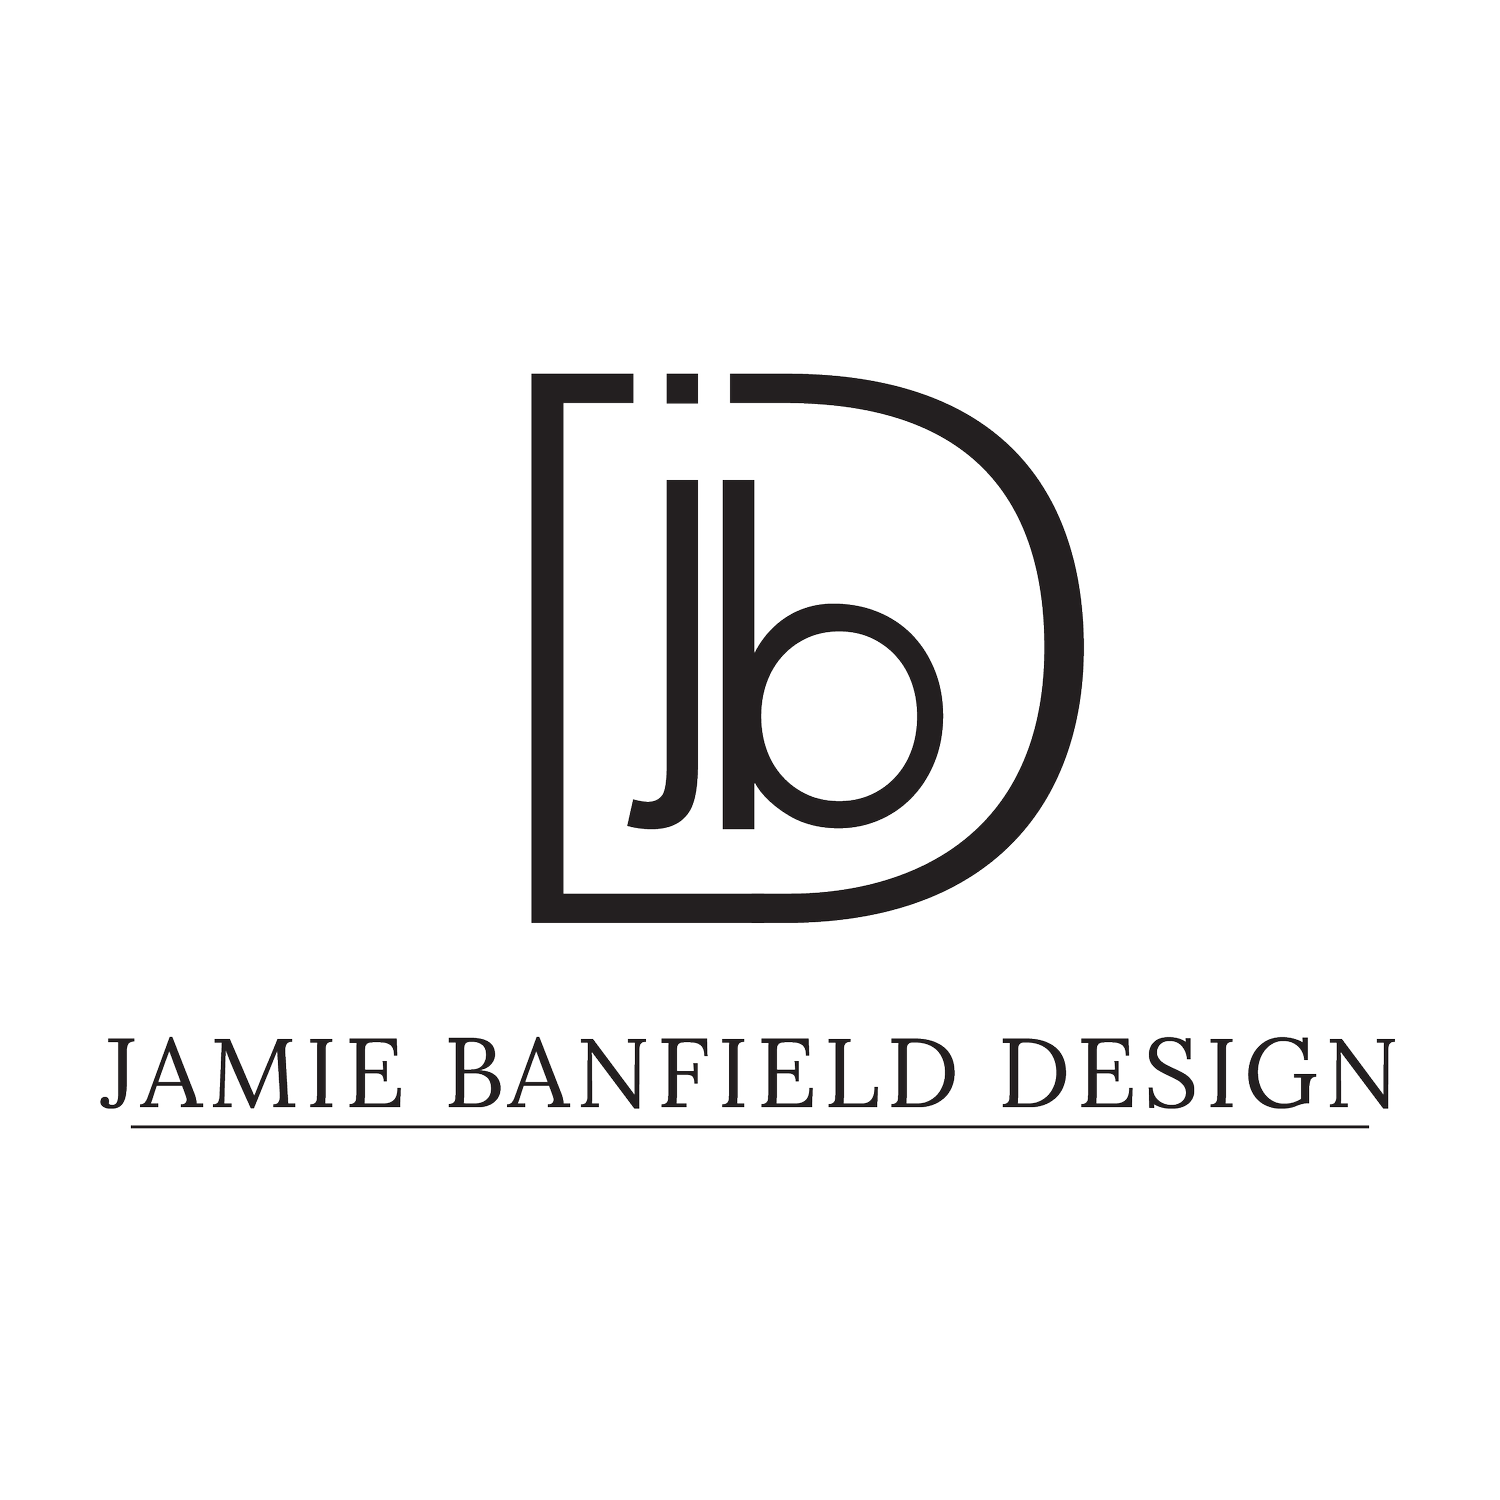 Jamie Banfield Design Inc